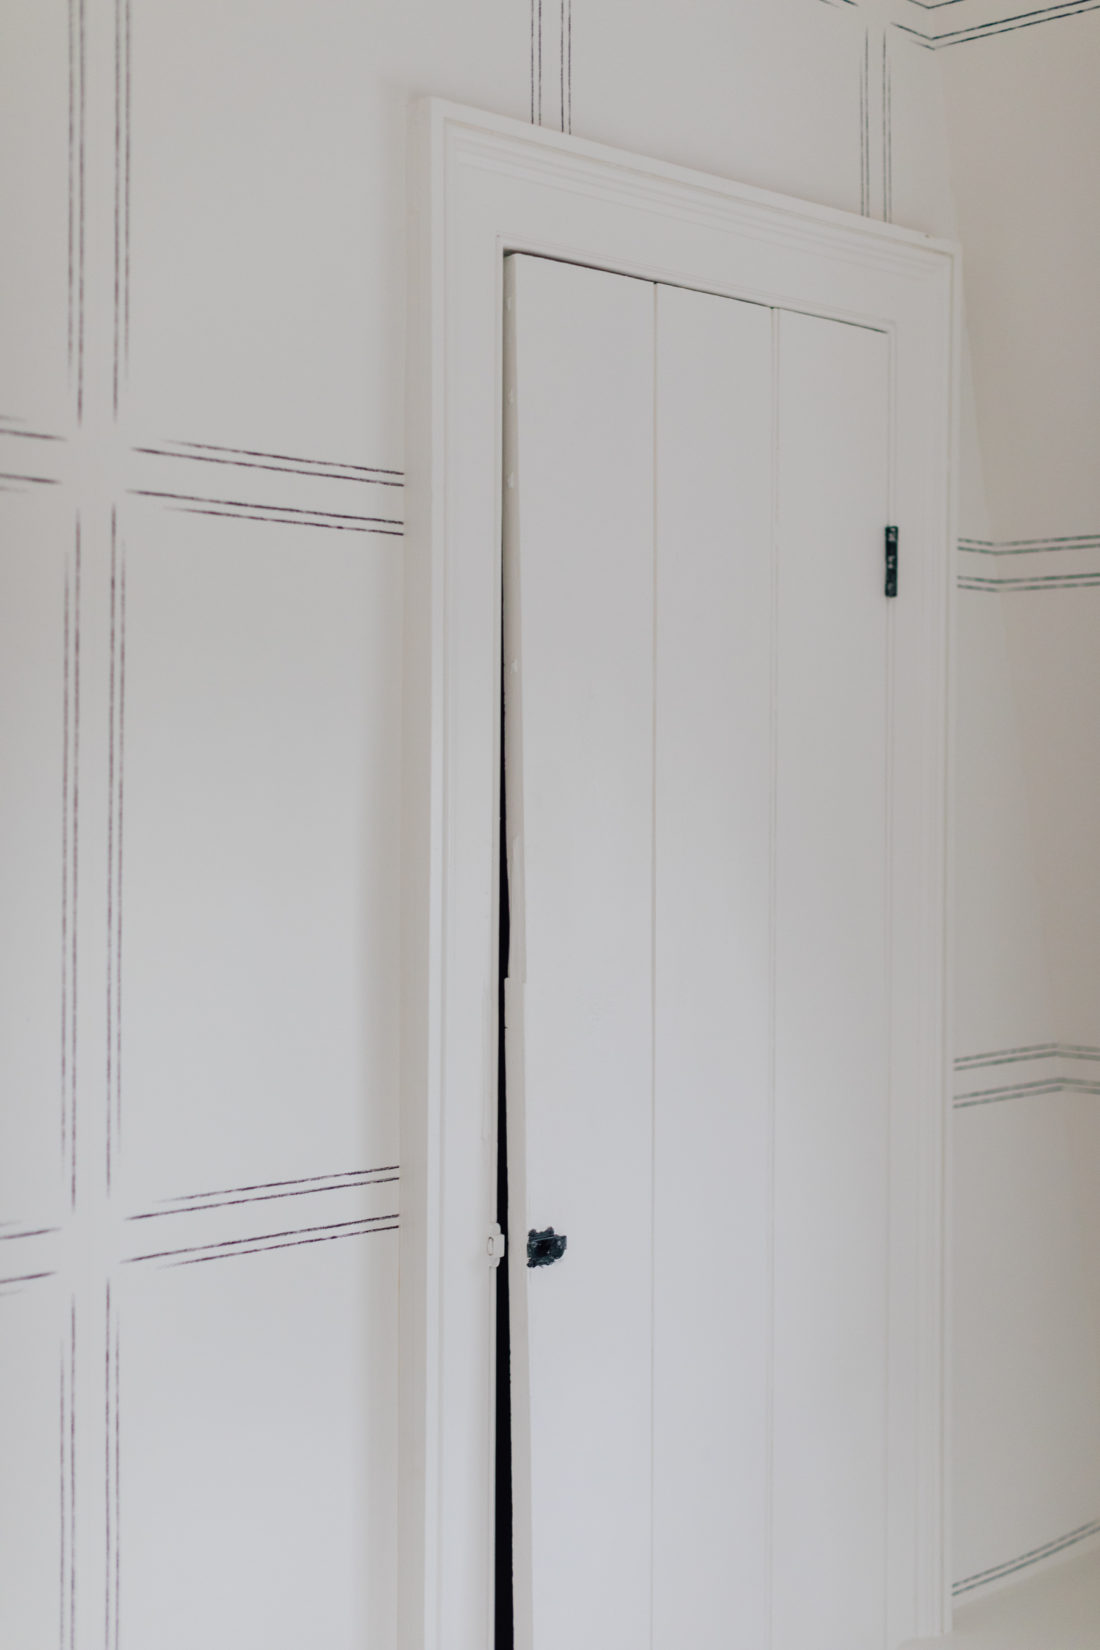 Original doors inside Eva Amurri's newly finished Guest Suite